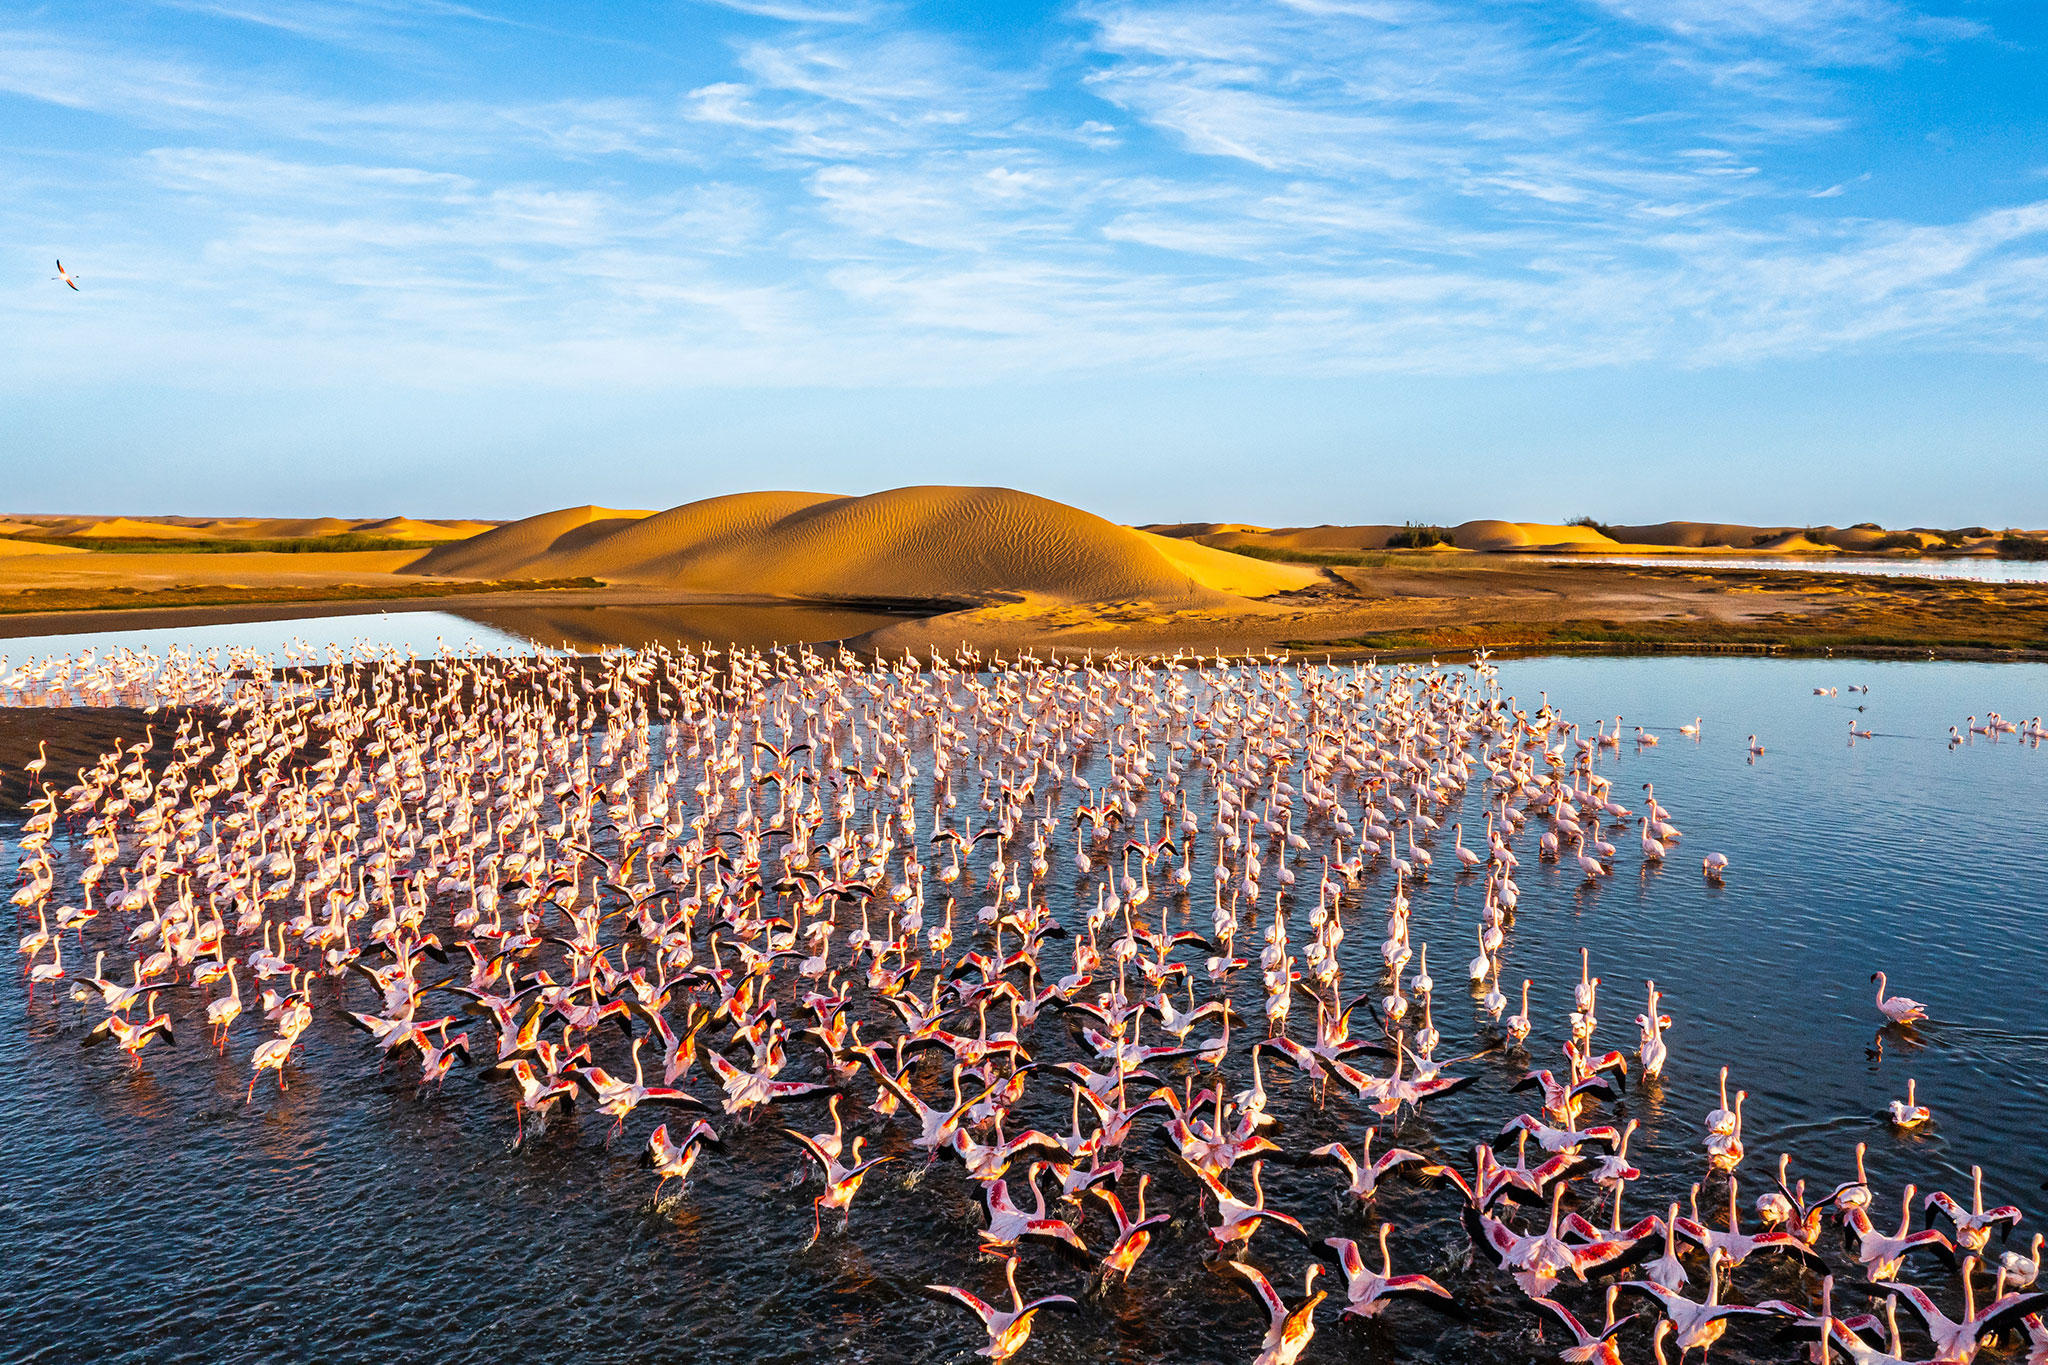 12-desert-scenery-with-saltwater-lagoons-full-of-beautiful-flamingos-namib-nukluft-national-park-walvish-bay-namibia-adobestock566263871-1.jpg